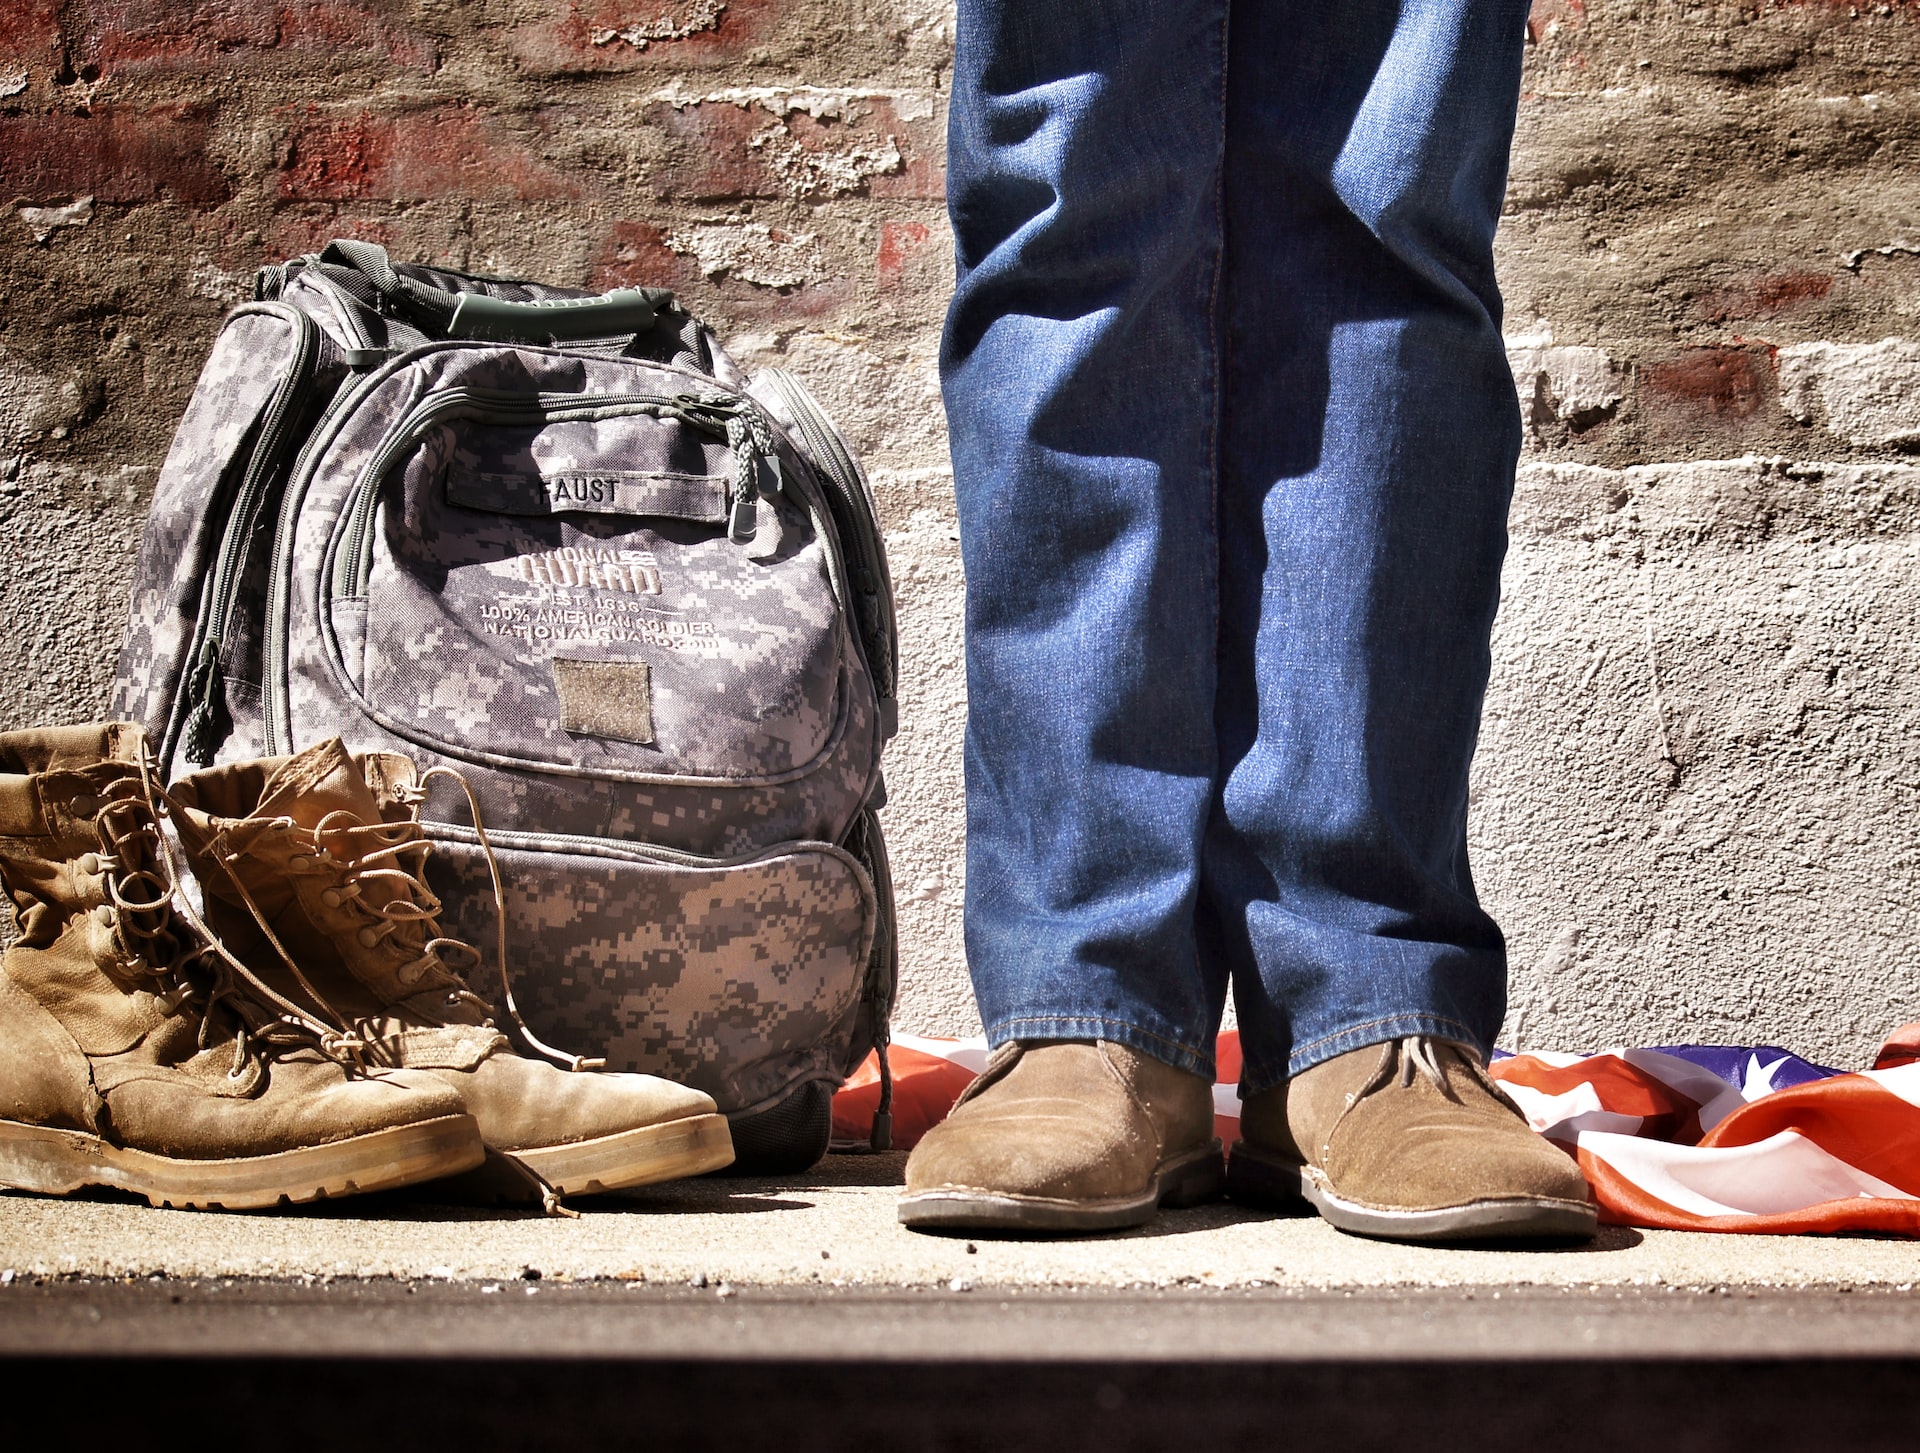 Shoes and Bag of a Veteran | Veteran Car Donations